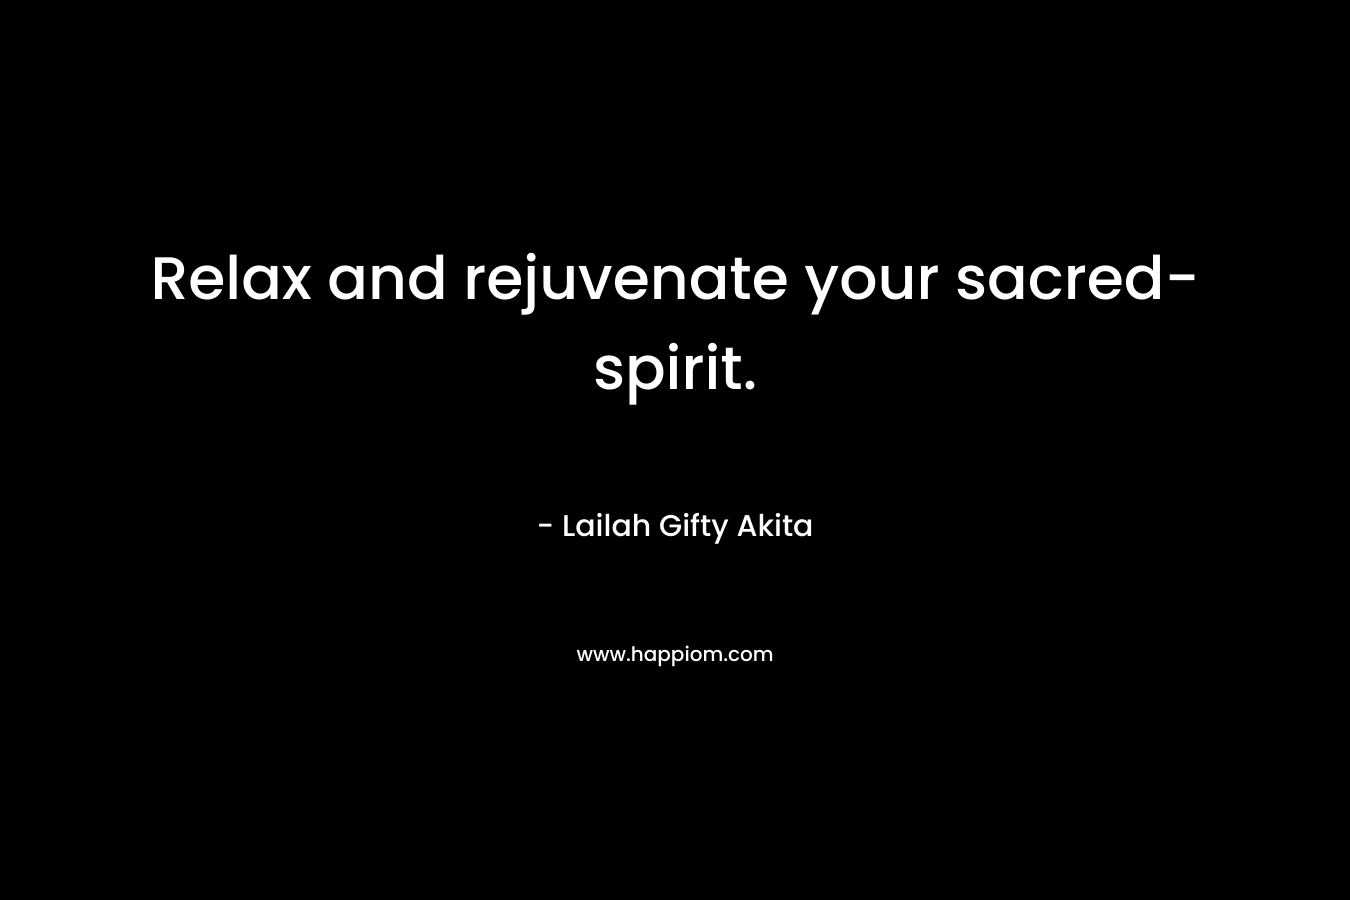 Relax and rejuvenate your sacred-spirit.